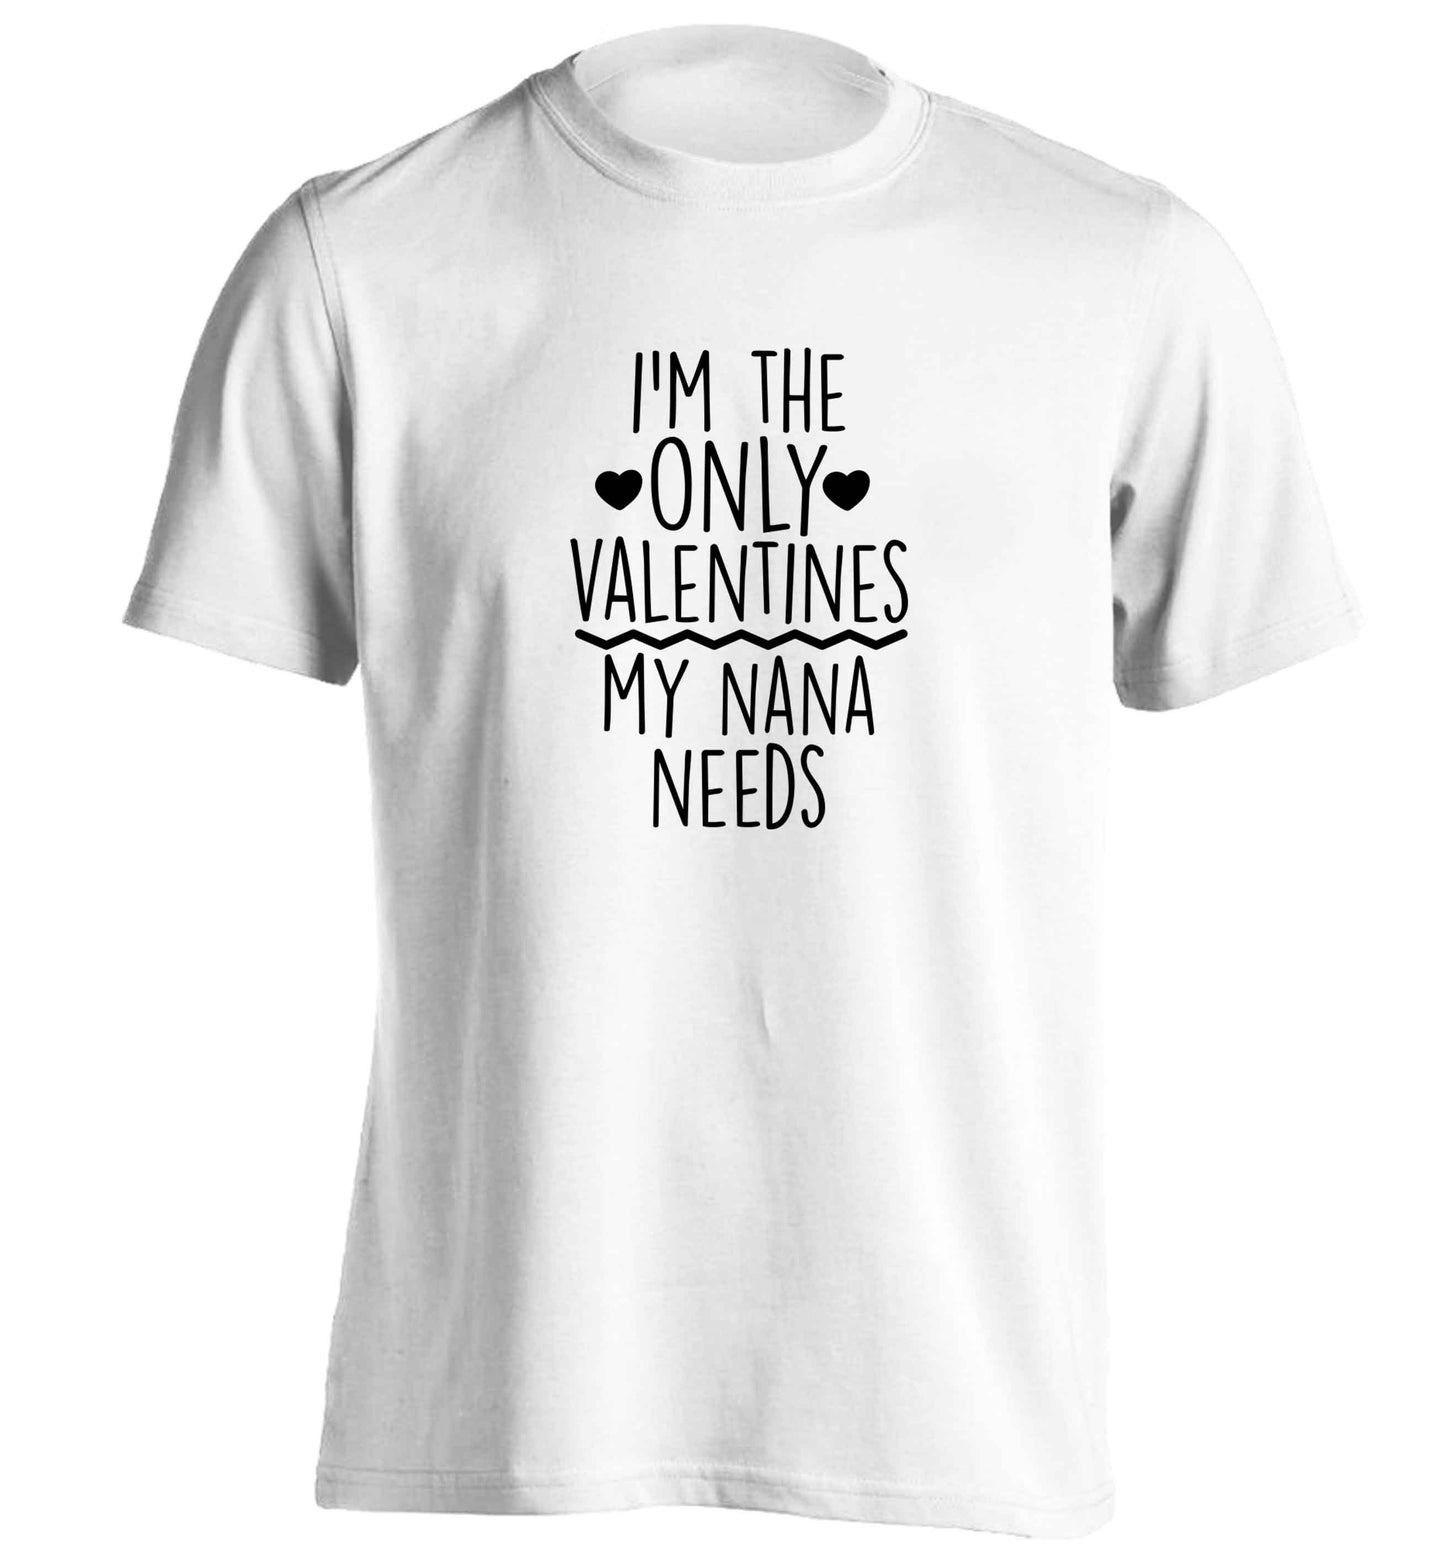 I'm the only valentines my nana needs adults unisex white Tshirt 2XL